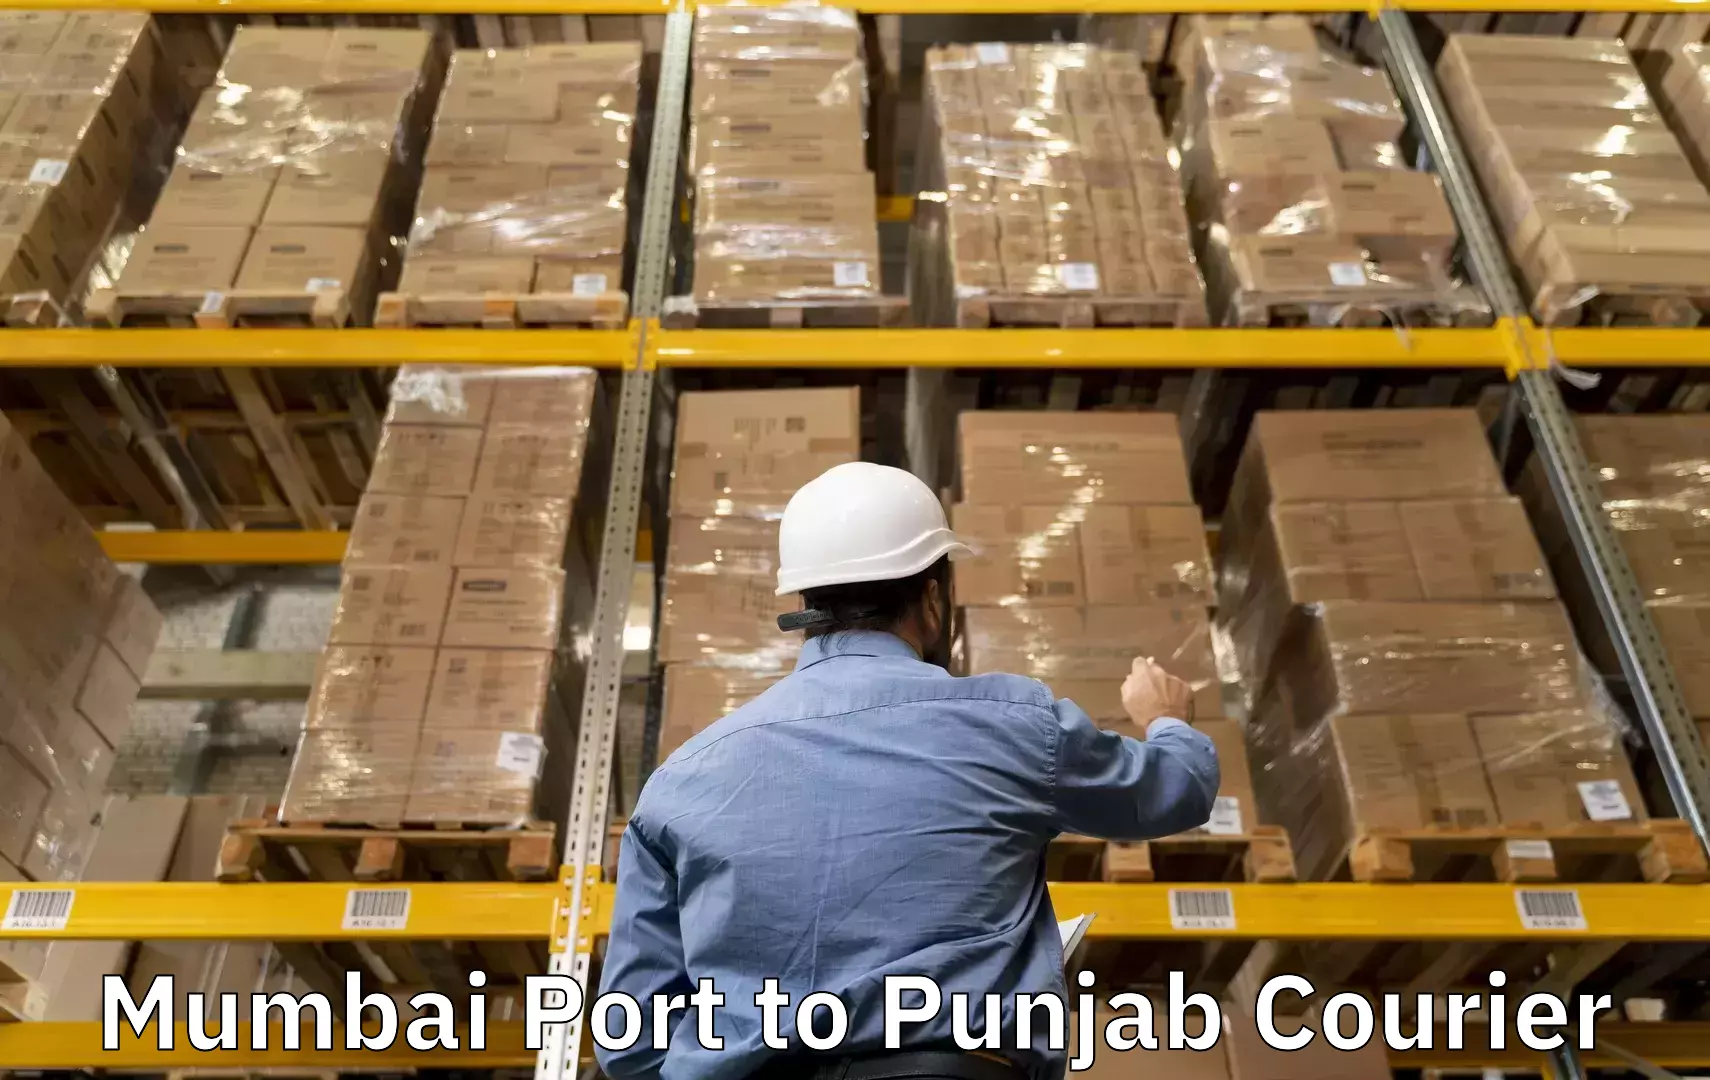 Luggage shipment tracking Mumbai Port to Ludhiana